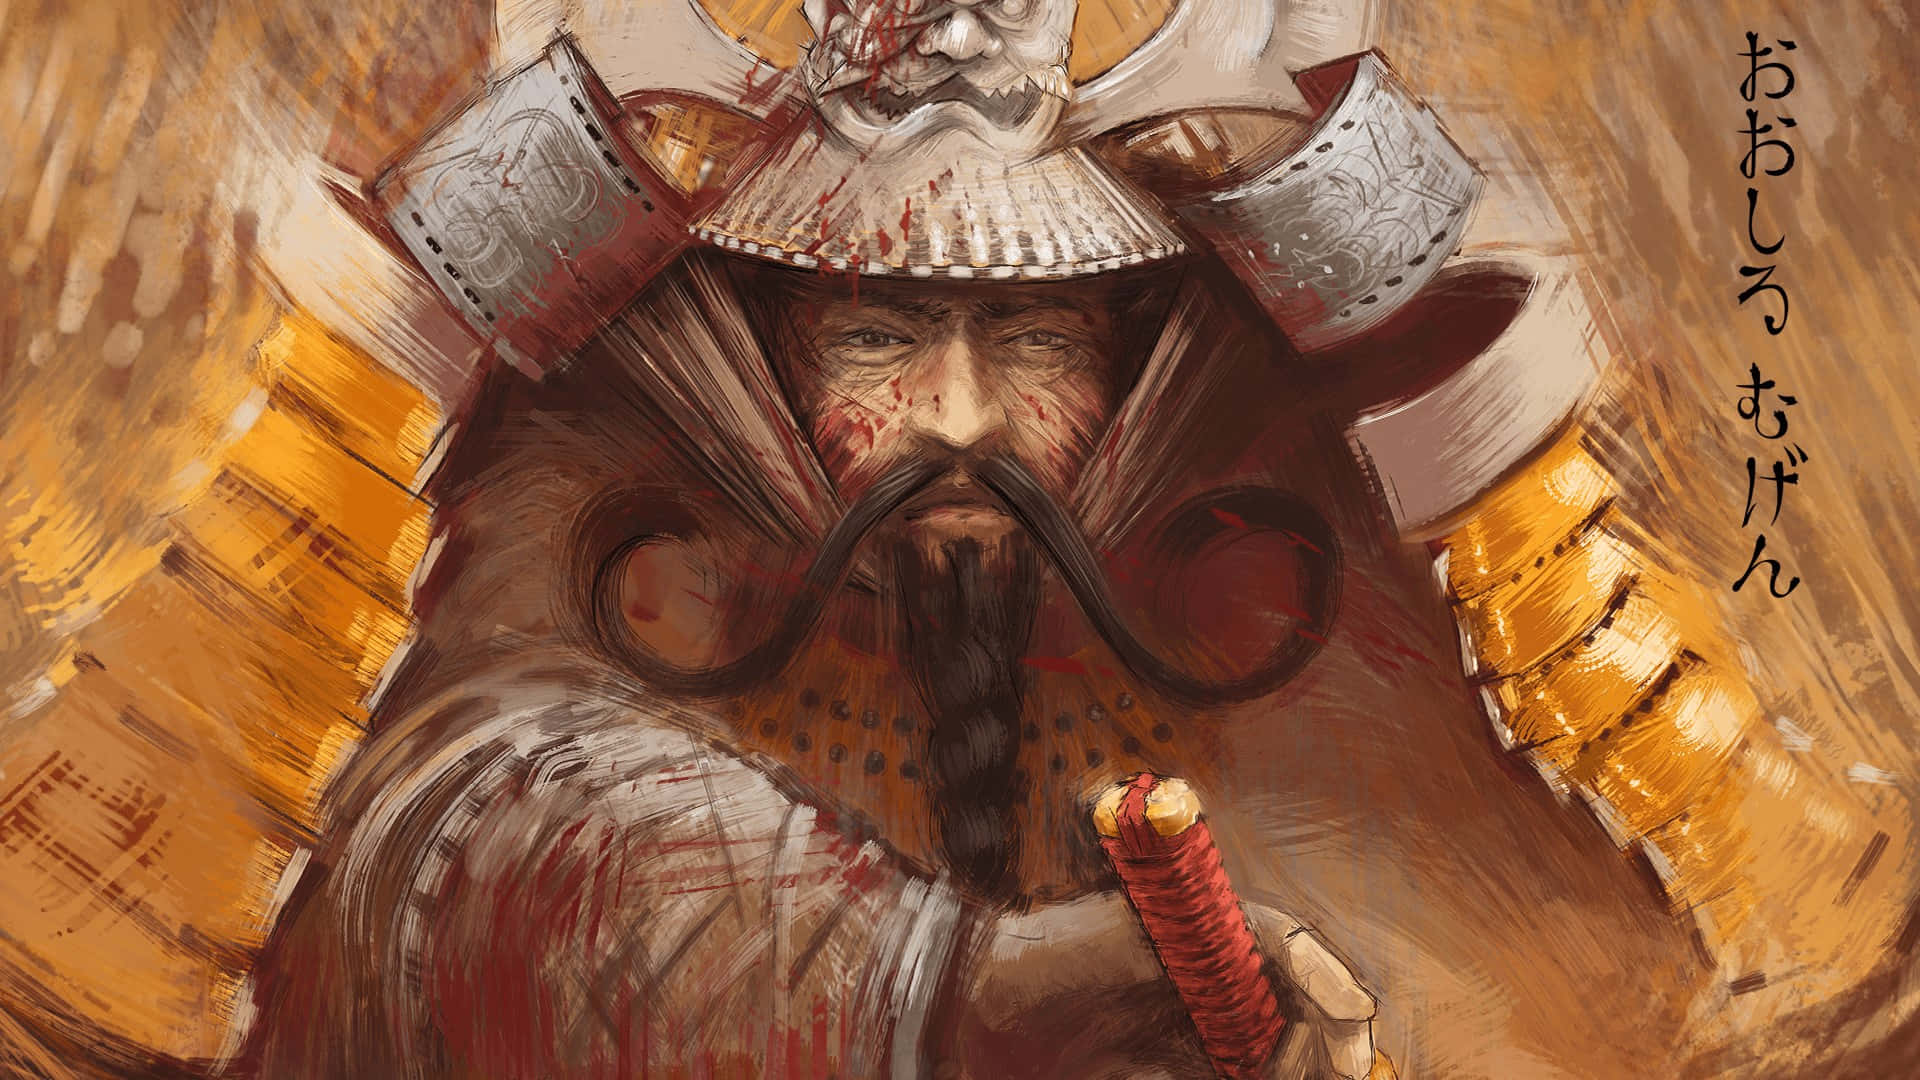 Majestic Shogun Warrior in Battle Wallpaper